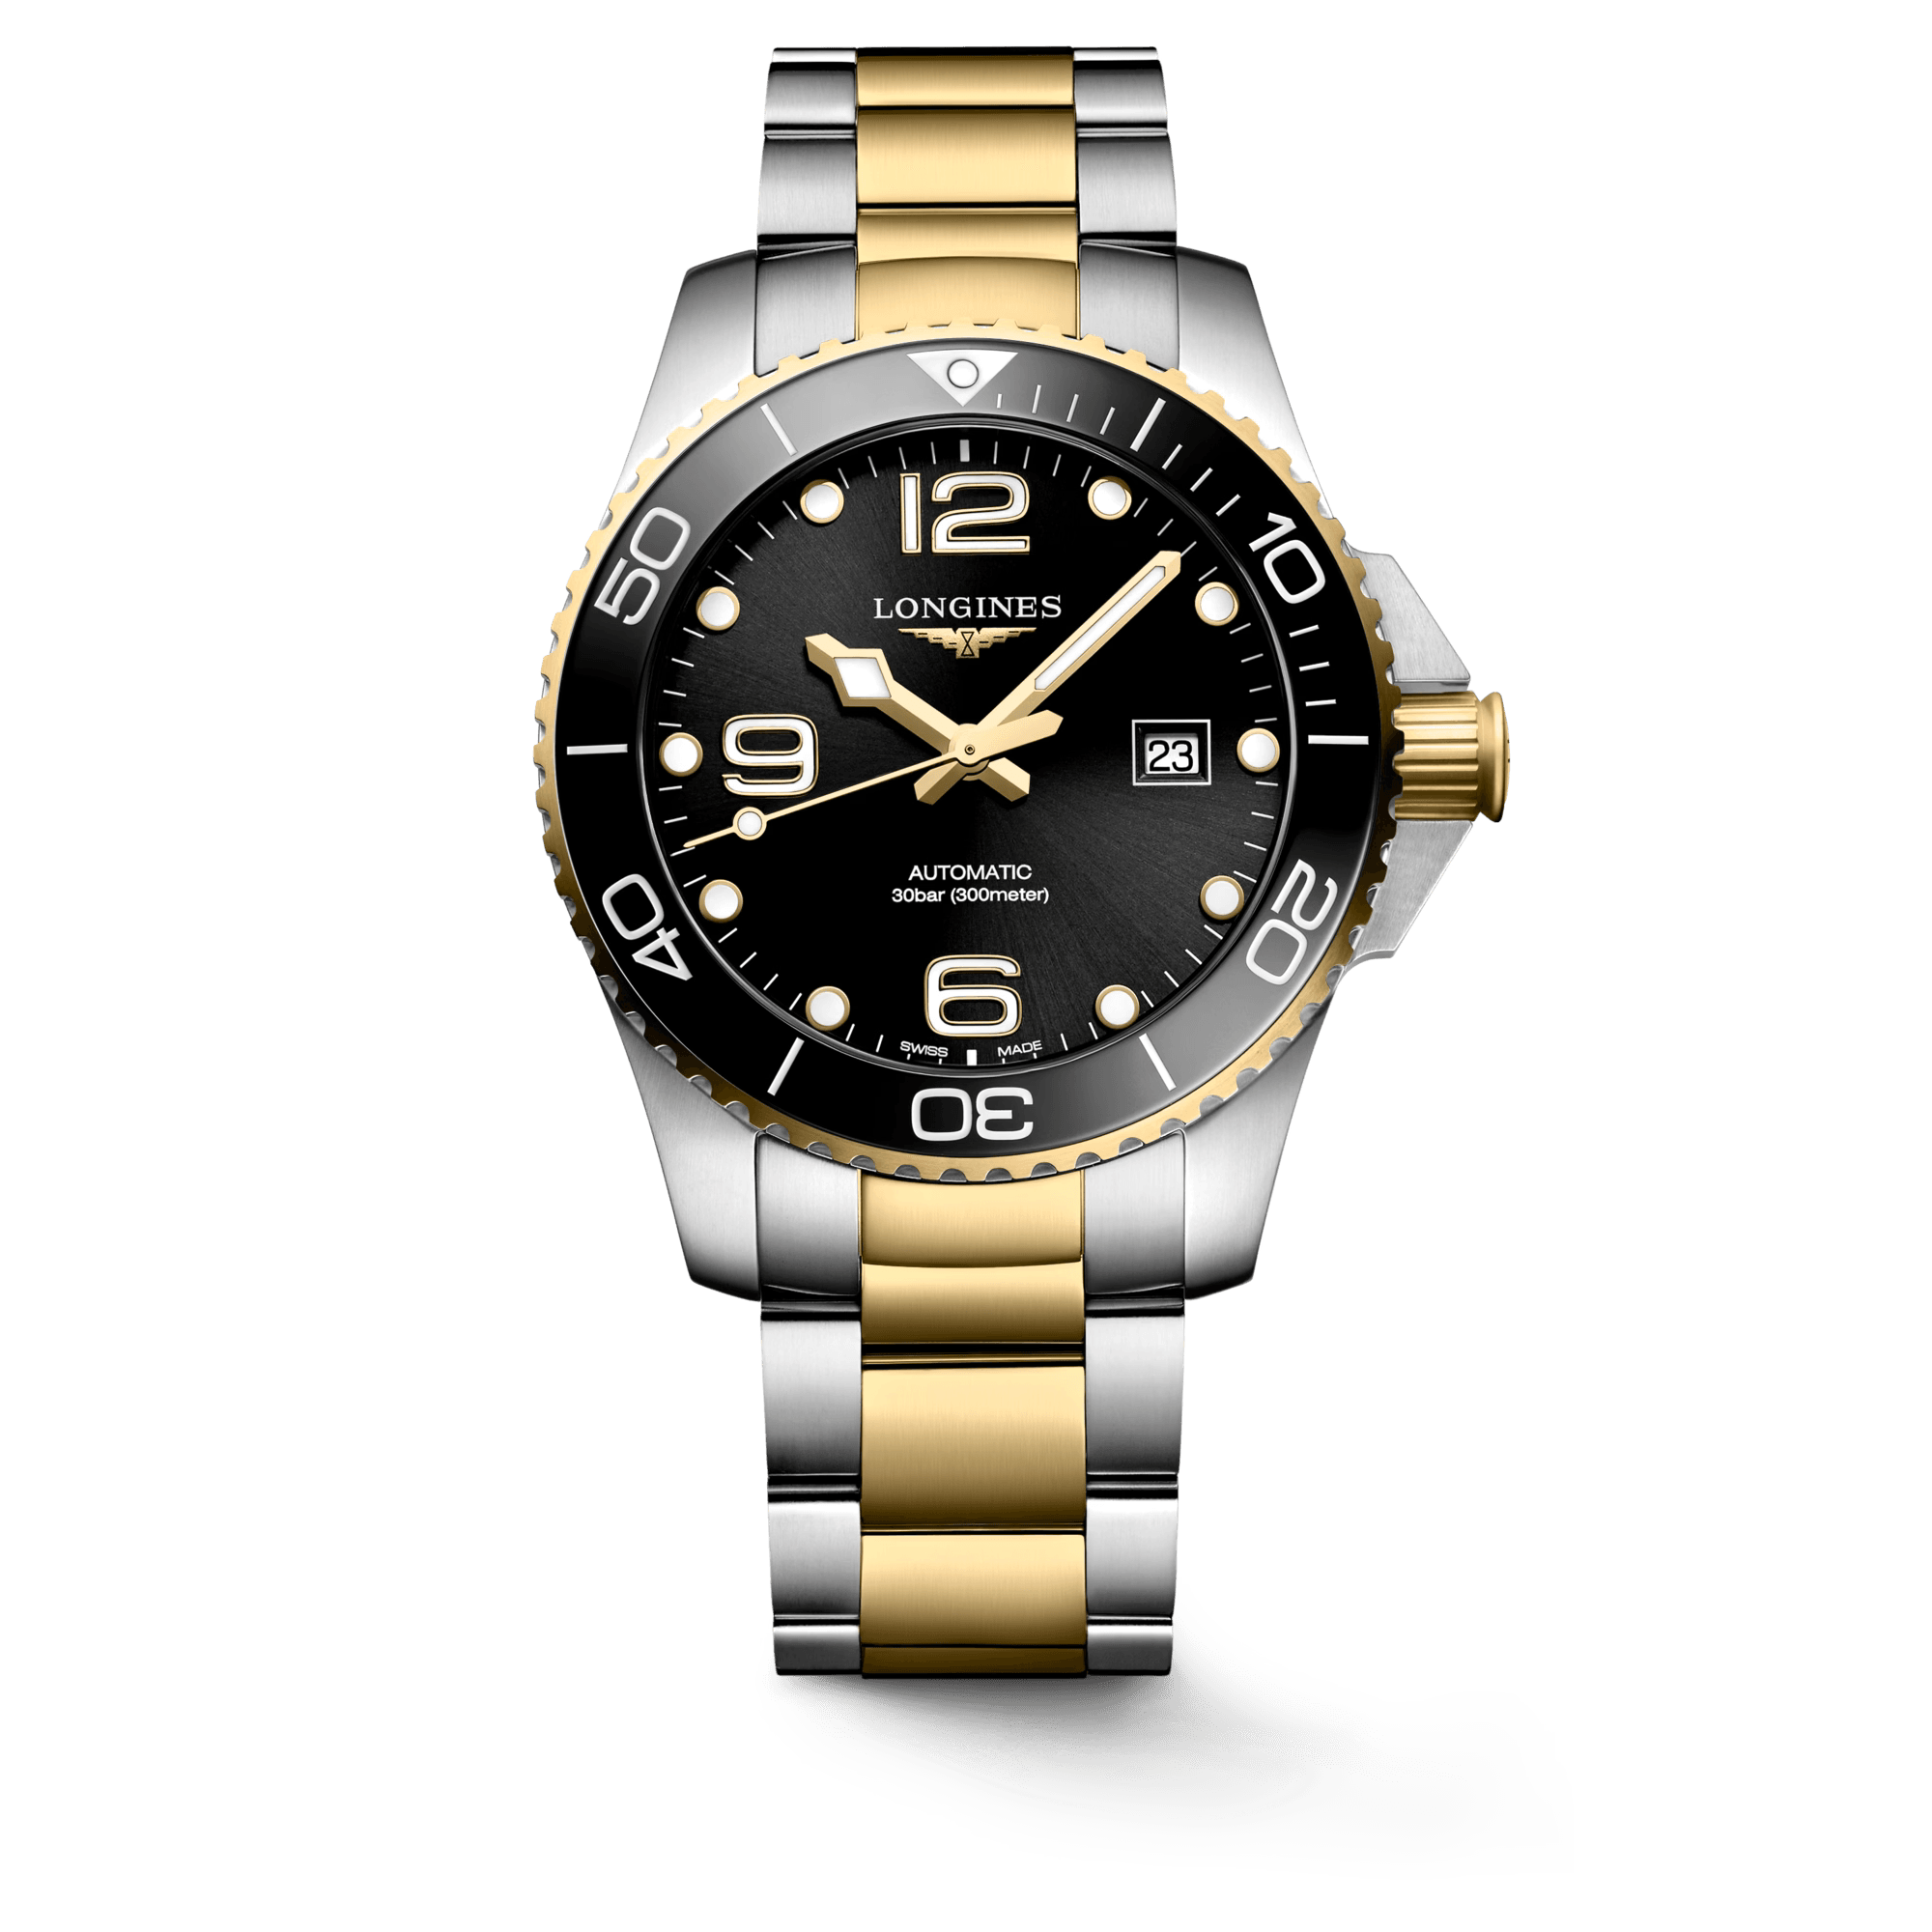 Longines Hydroconquest Automatic Men's Watch L37823567